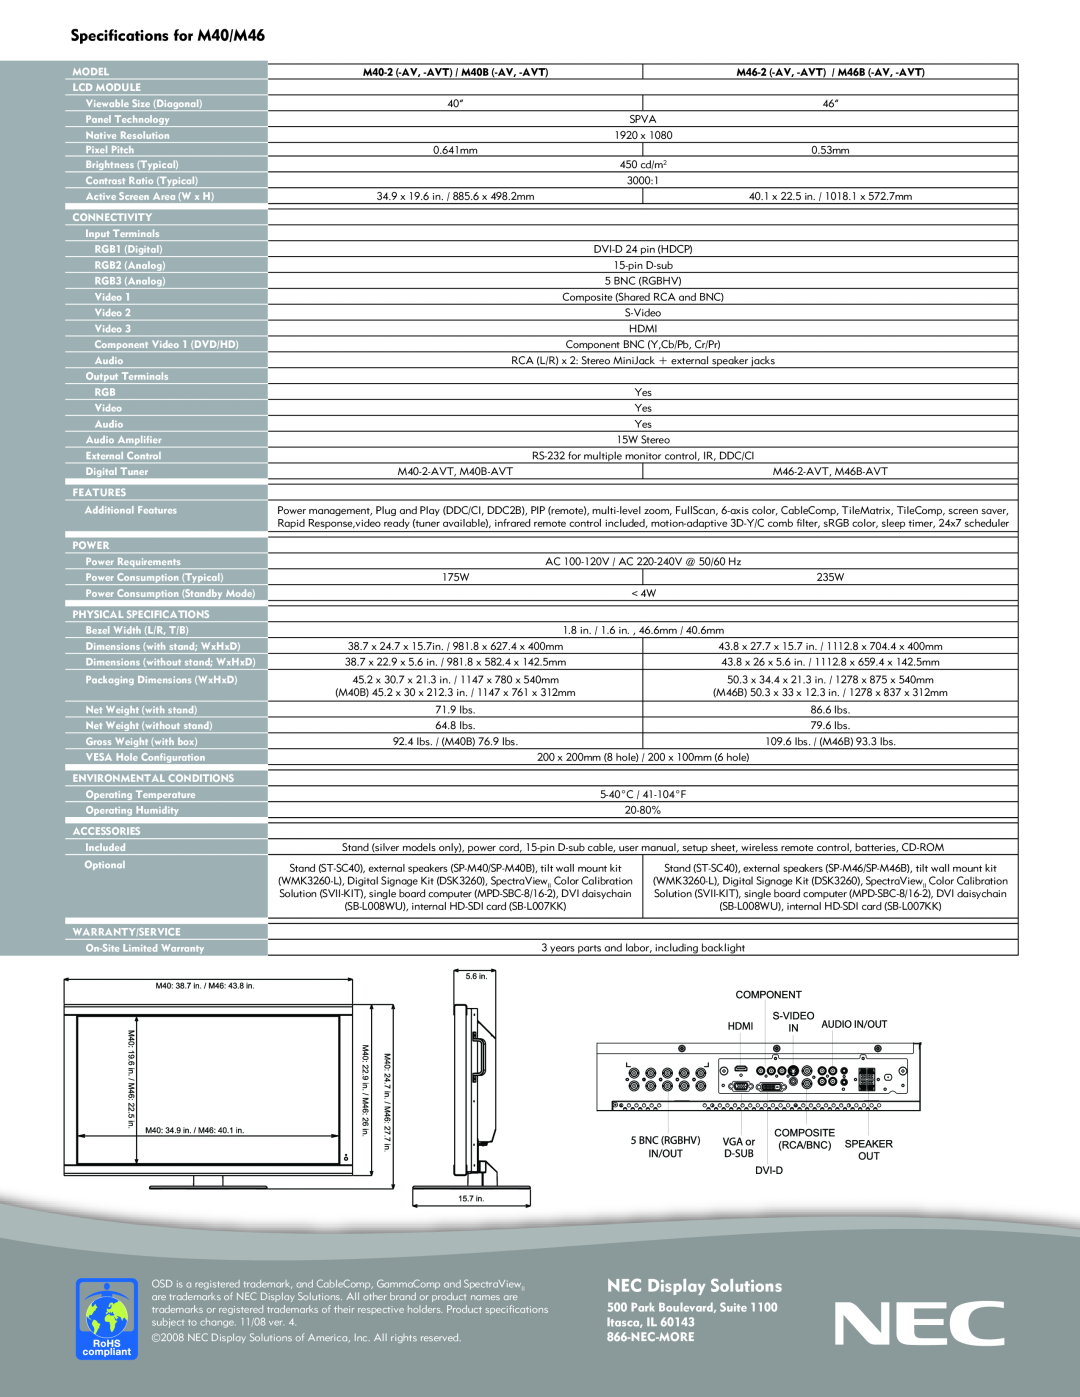 NEC M46-2-AVT, M40B-AVT NEC Display Solutions, Specifications for M40/M46, Park Boulevard, Suite Itasca, IL 866-NEC-MORE 